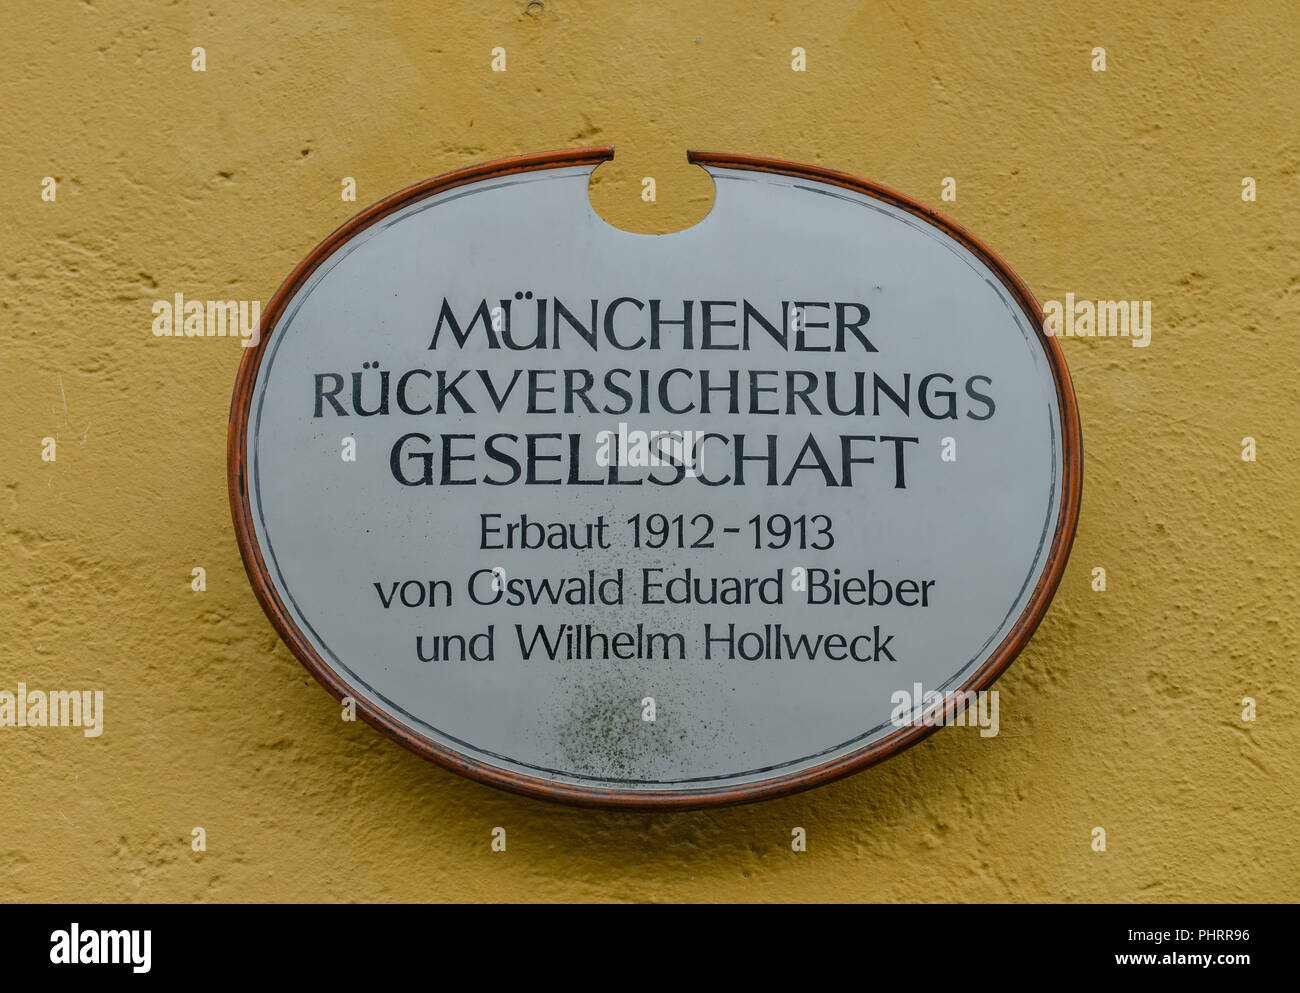 Schild, Hauptgebaeude, Muenchener Rueckversicherung, Koeniginstrasse, Monaco di Baviera, Deutschland Foto Stock